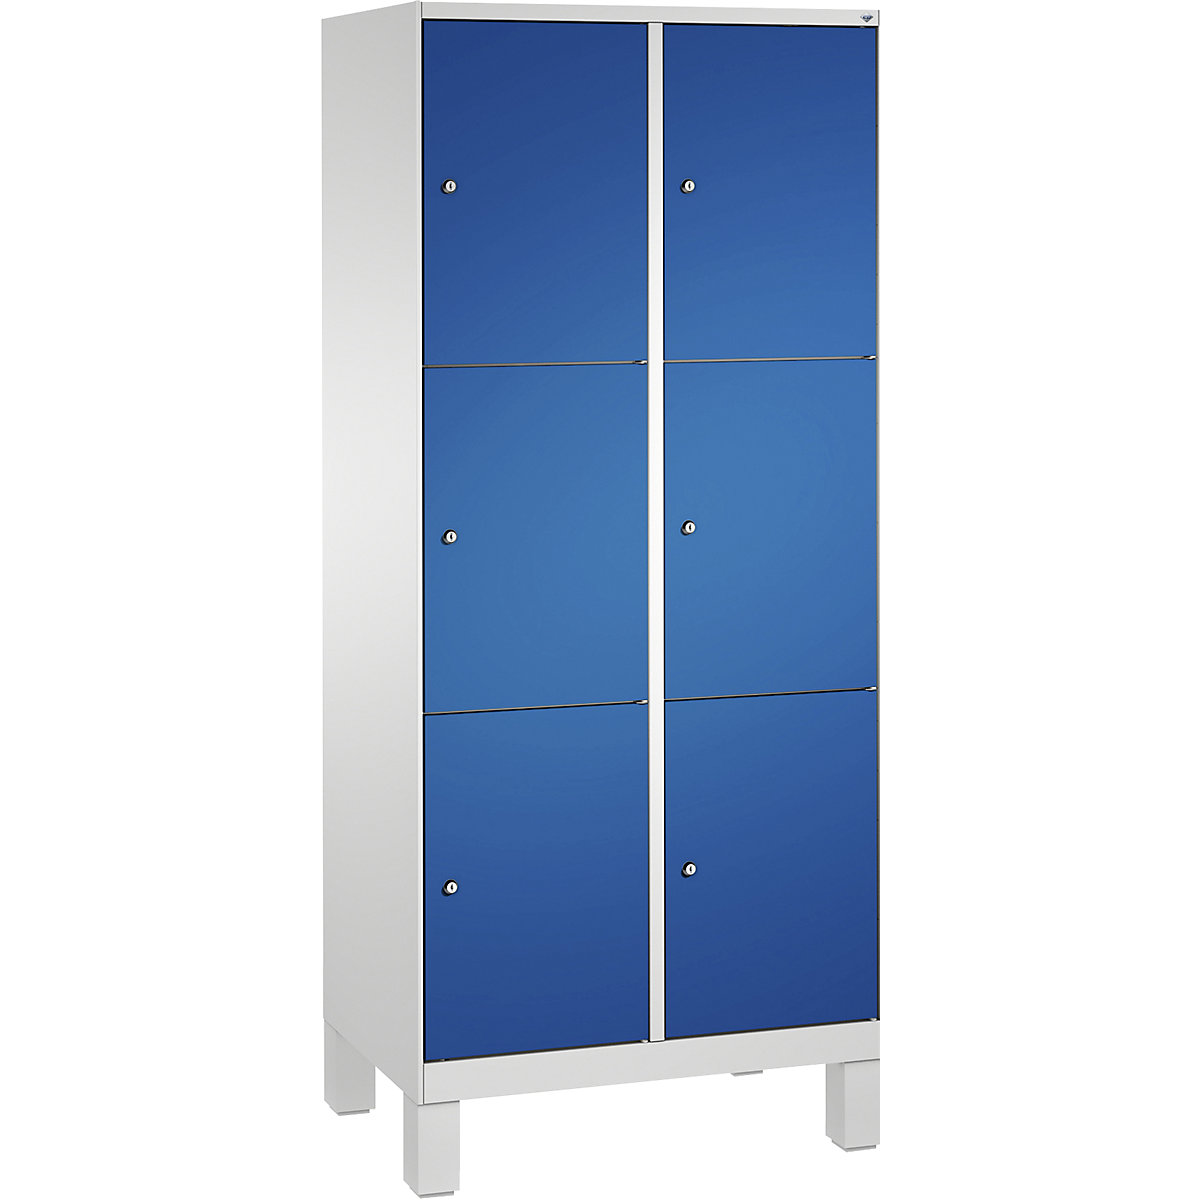 EVOLO locker unit, with feet – C+P, 2 compartments, 3 shelf compartments each, compartment width 400 mm, light grey / gentian blue-7